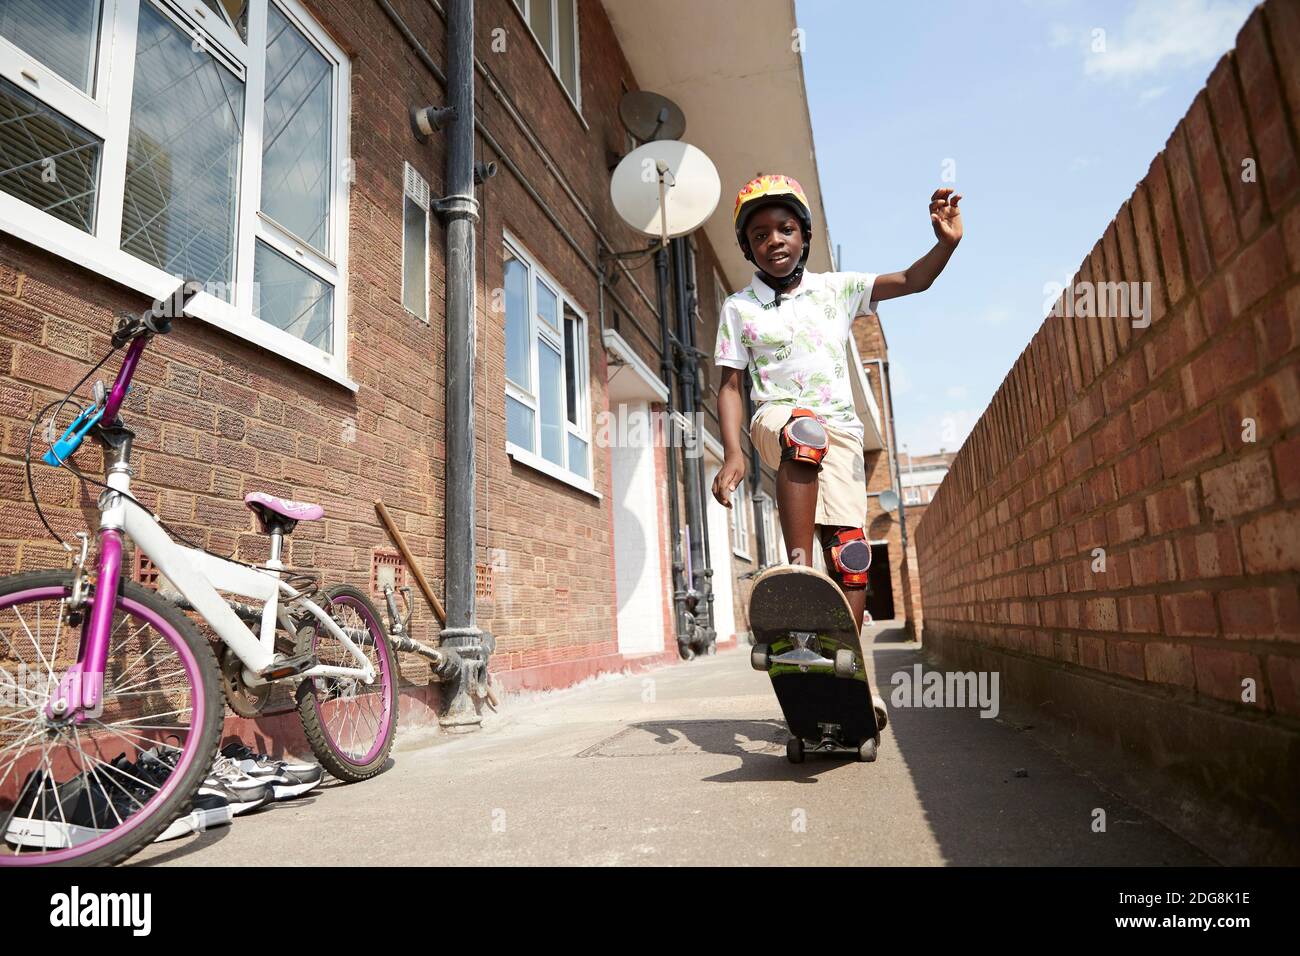 Portrait sorgloser Junge Skateboarding in sonniger Wohngasse Stockfoto